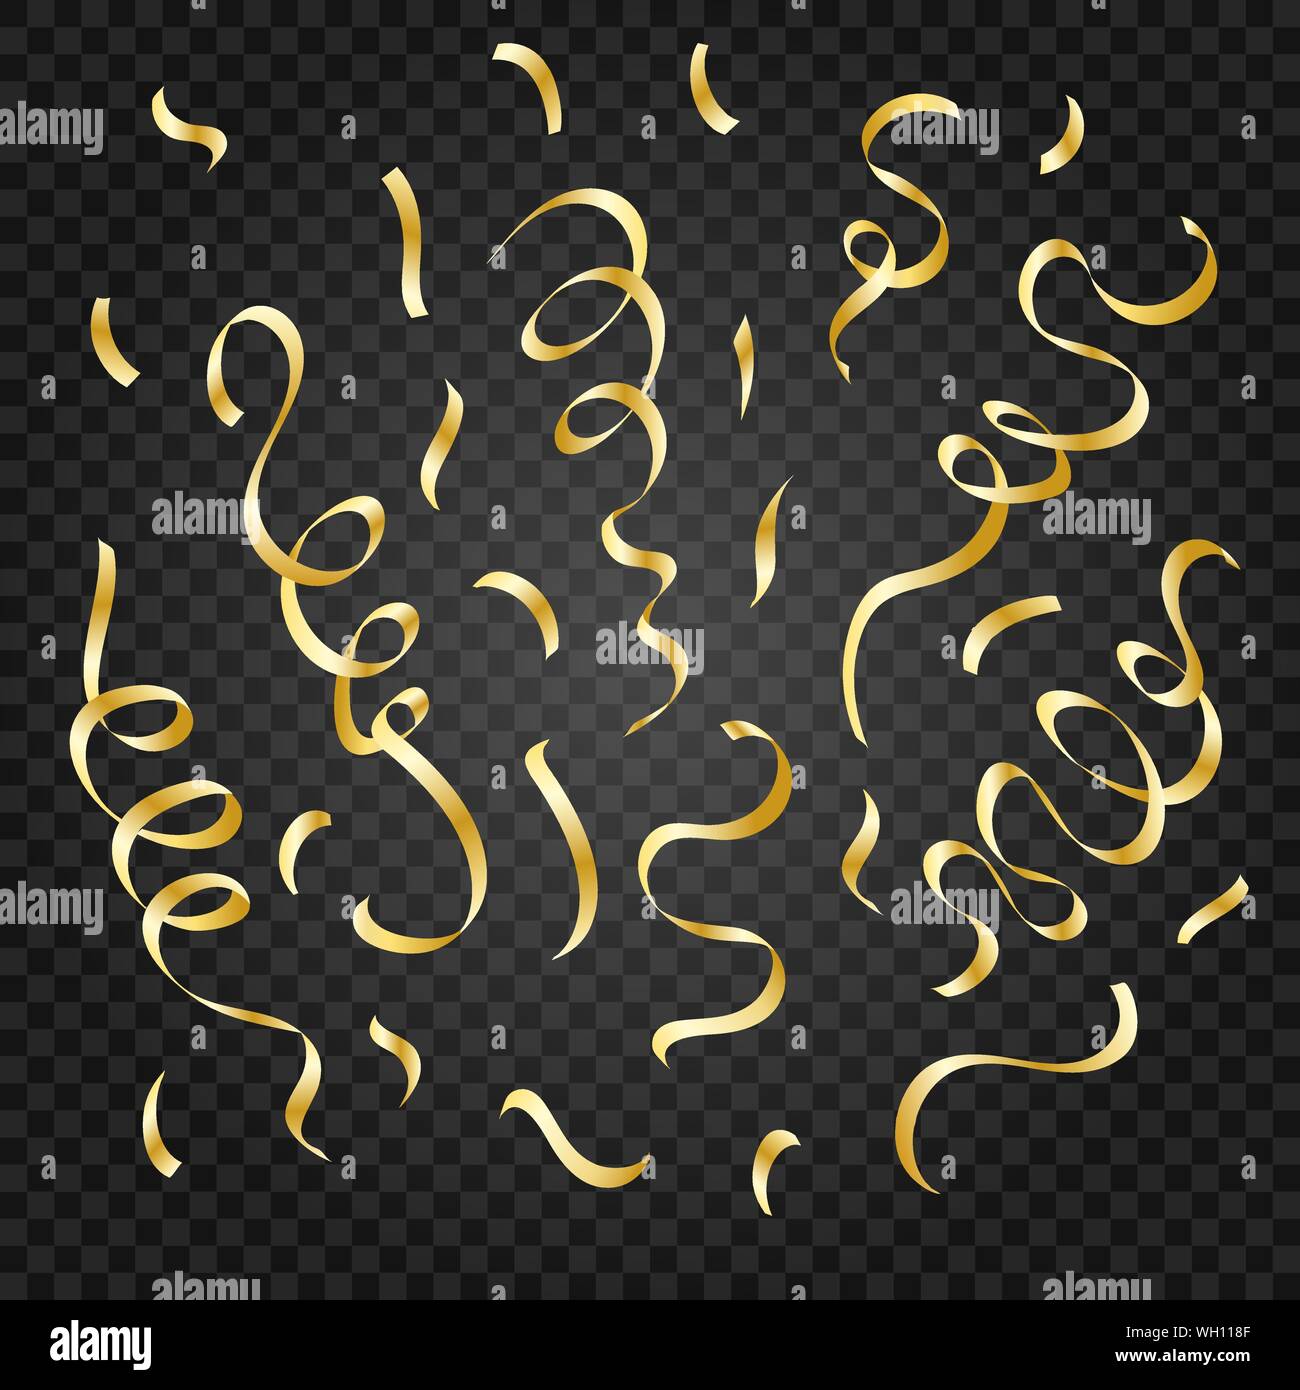 Golden confetti on transparent background. Holiday Surprise Party Decor Element set. Vector illustration Stock Vector